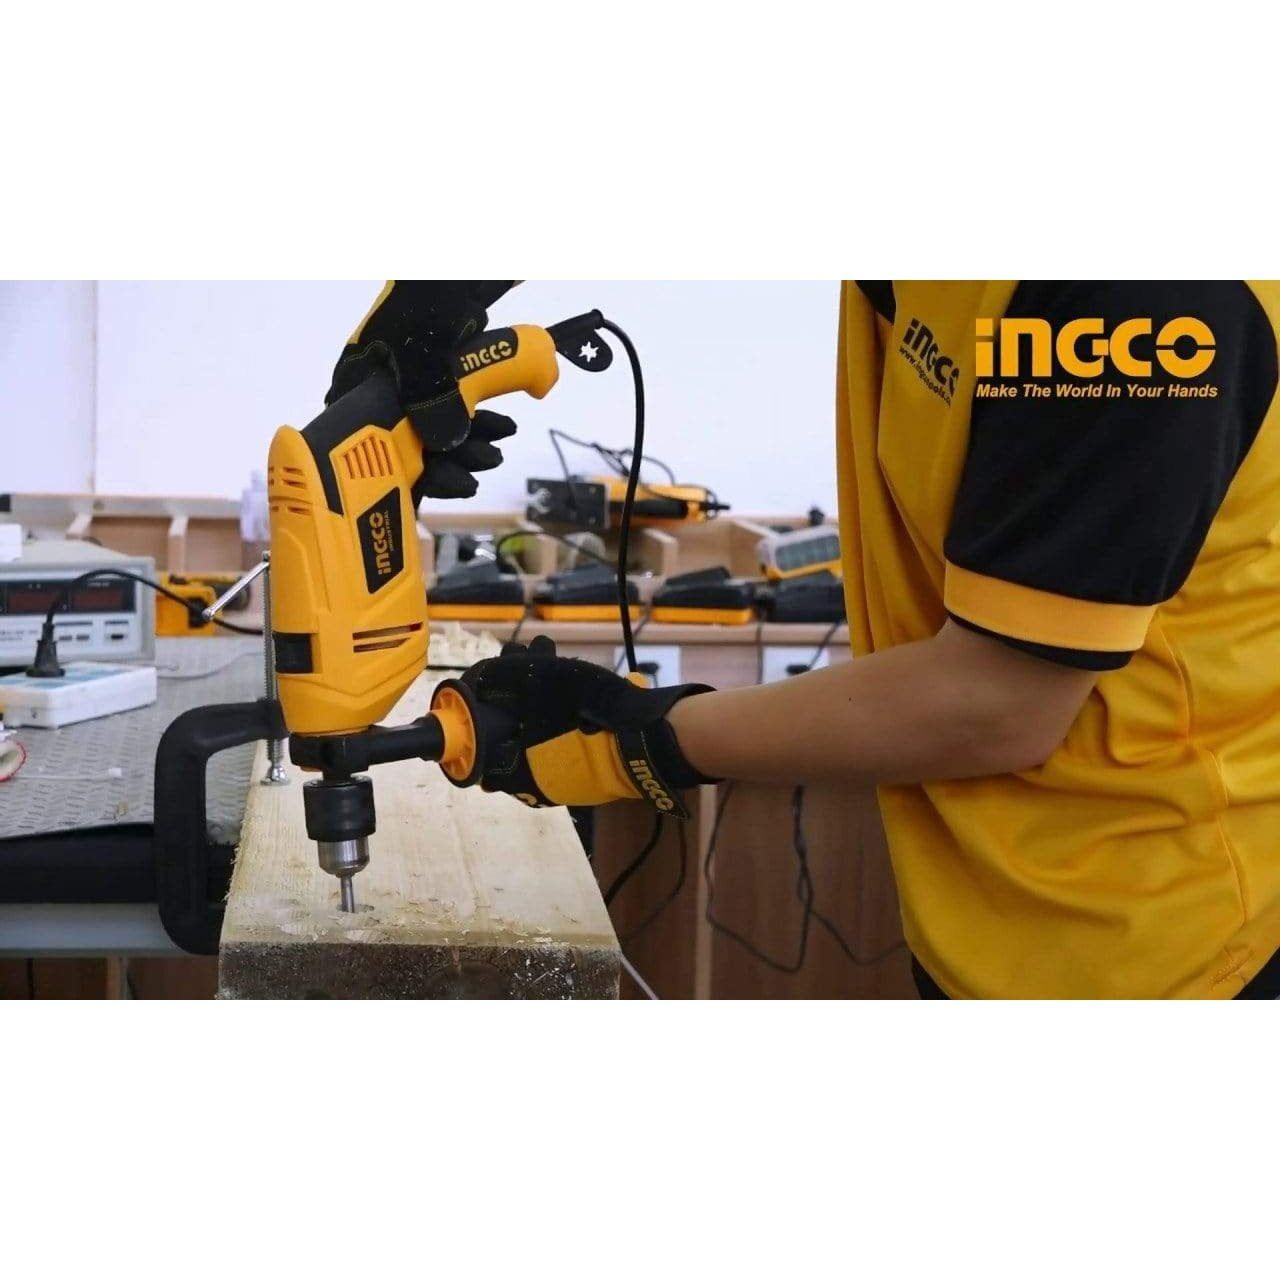 Ingco Hammer Impact Drill 13mm 850W - ID8508 | Supply Master | Accra, Ghana Tools Building Steel Engineering Hardware tool